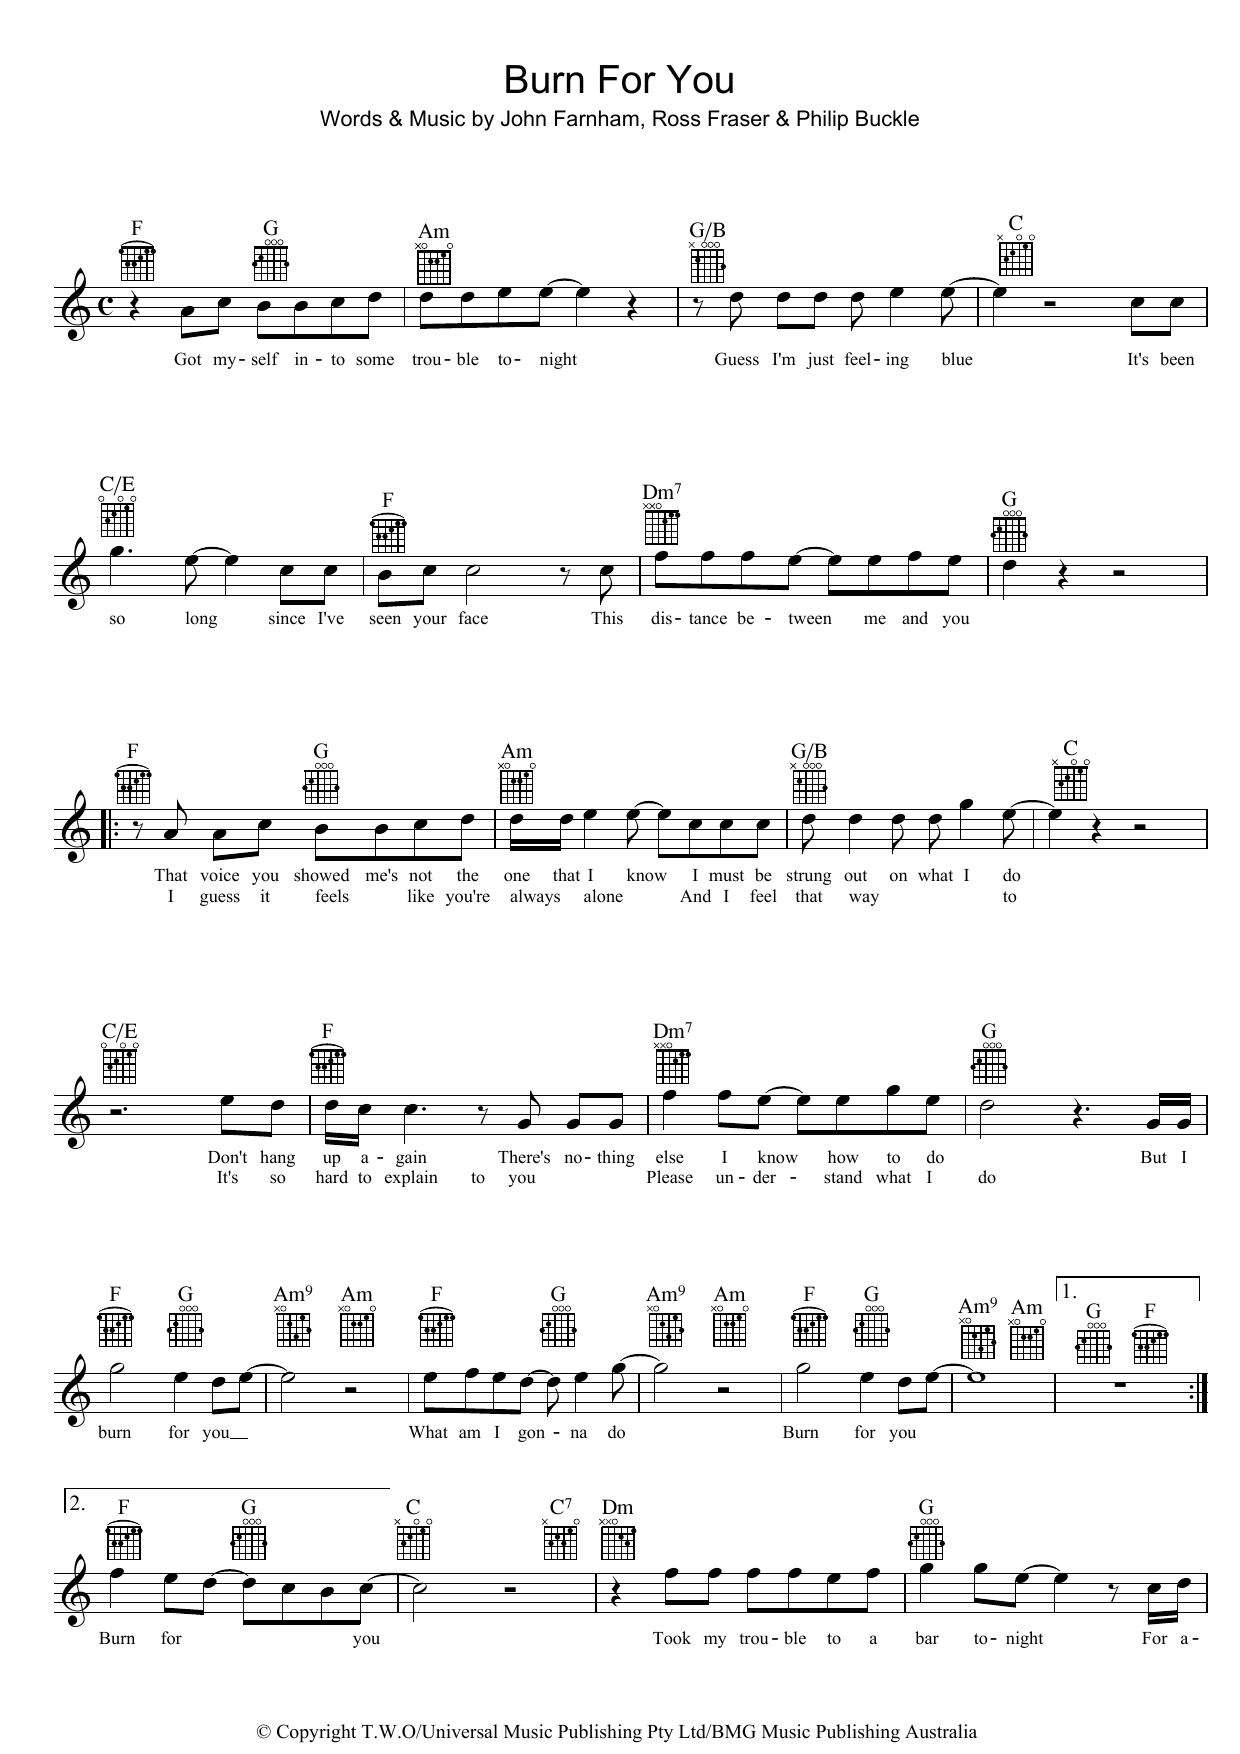 John Farnham Burn For You Sheet Music Notes & Chords for Melody Line, Lyrics & Chords - Download or Print PDF